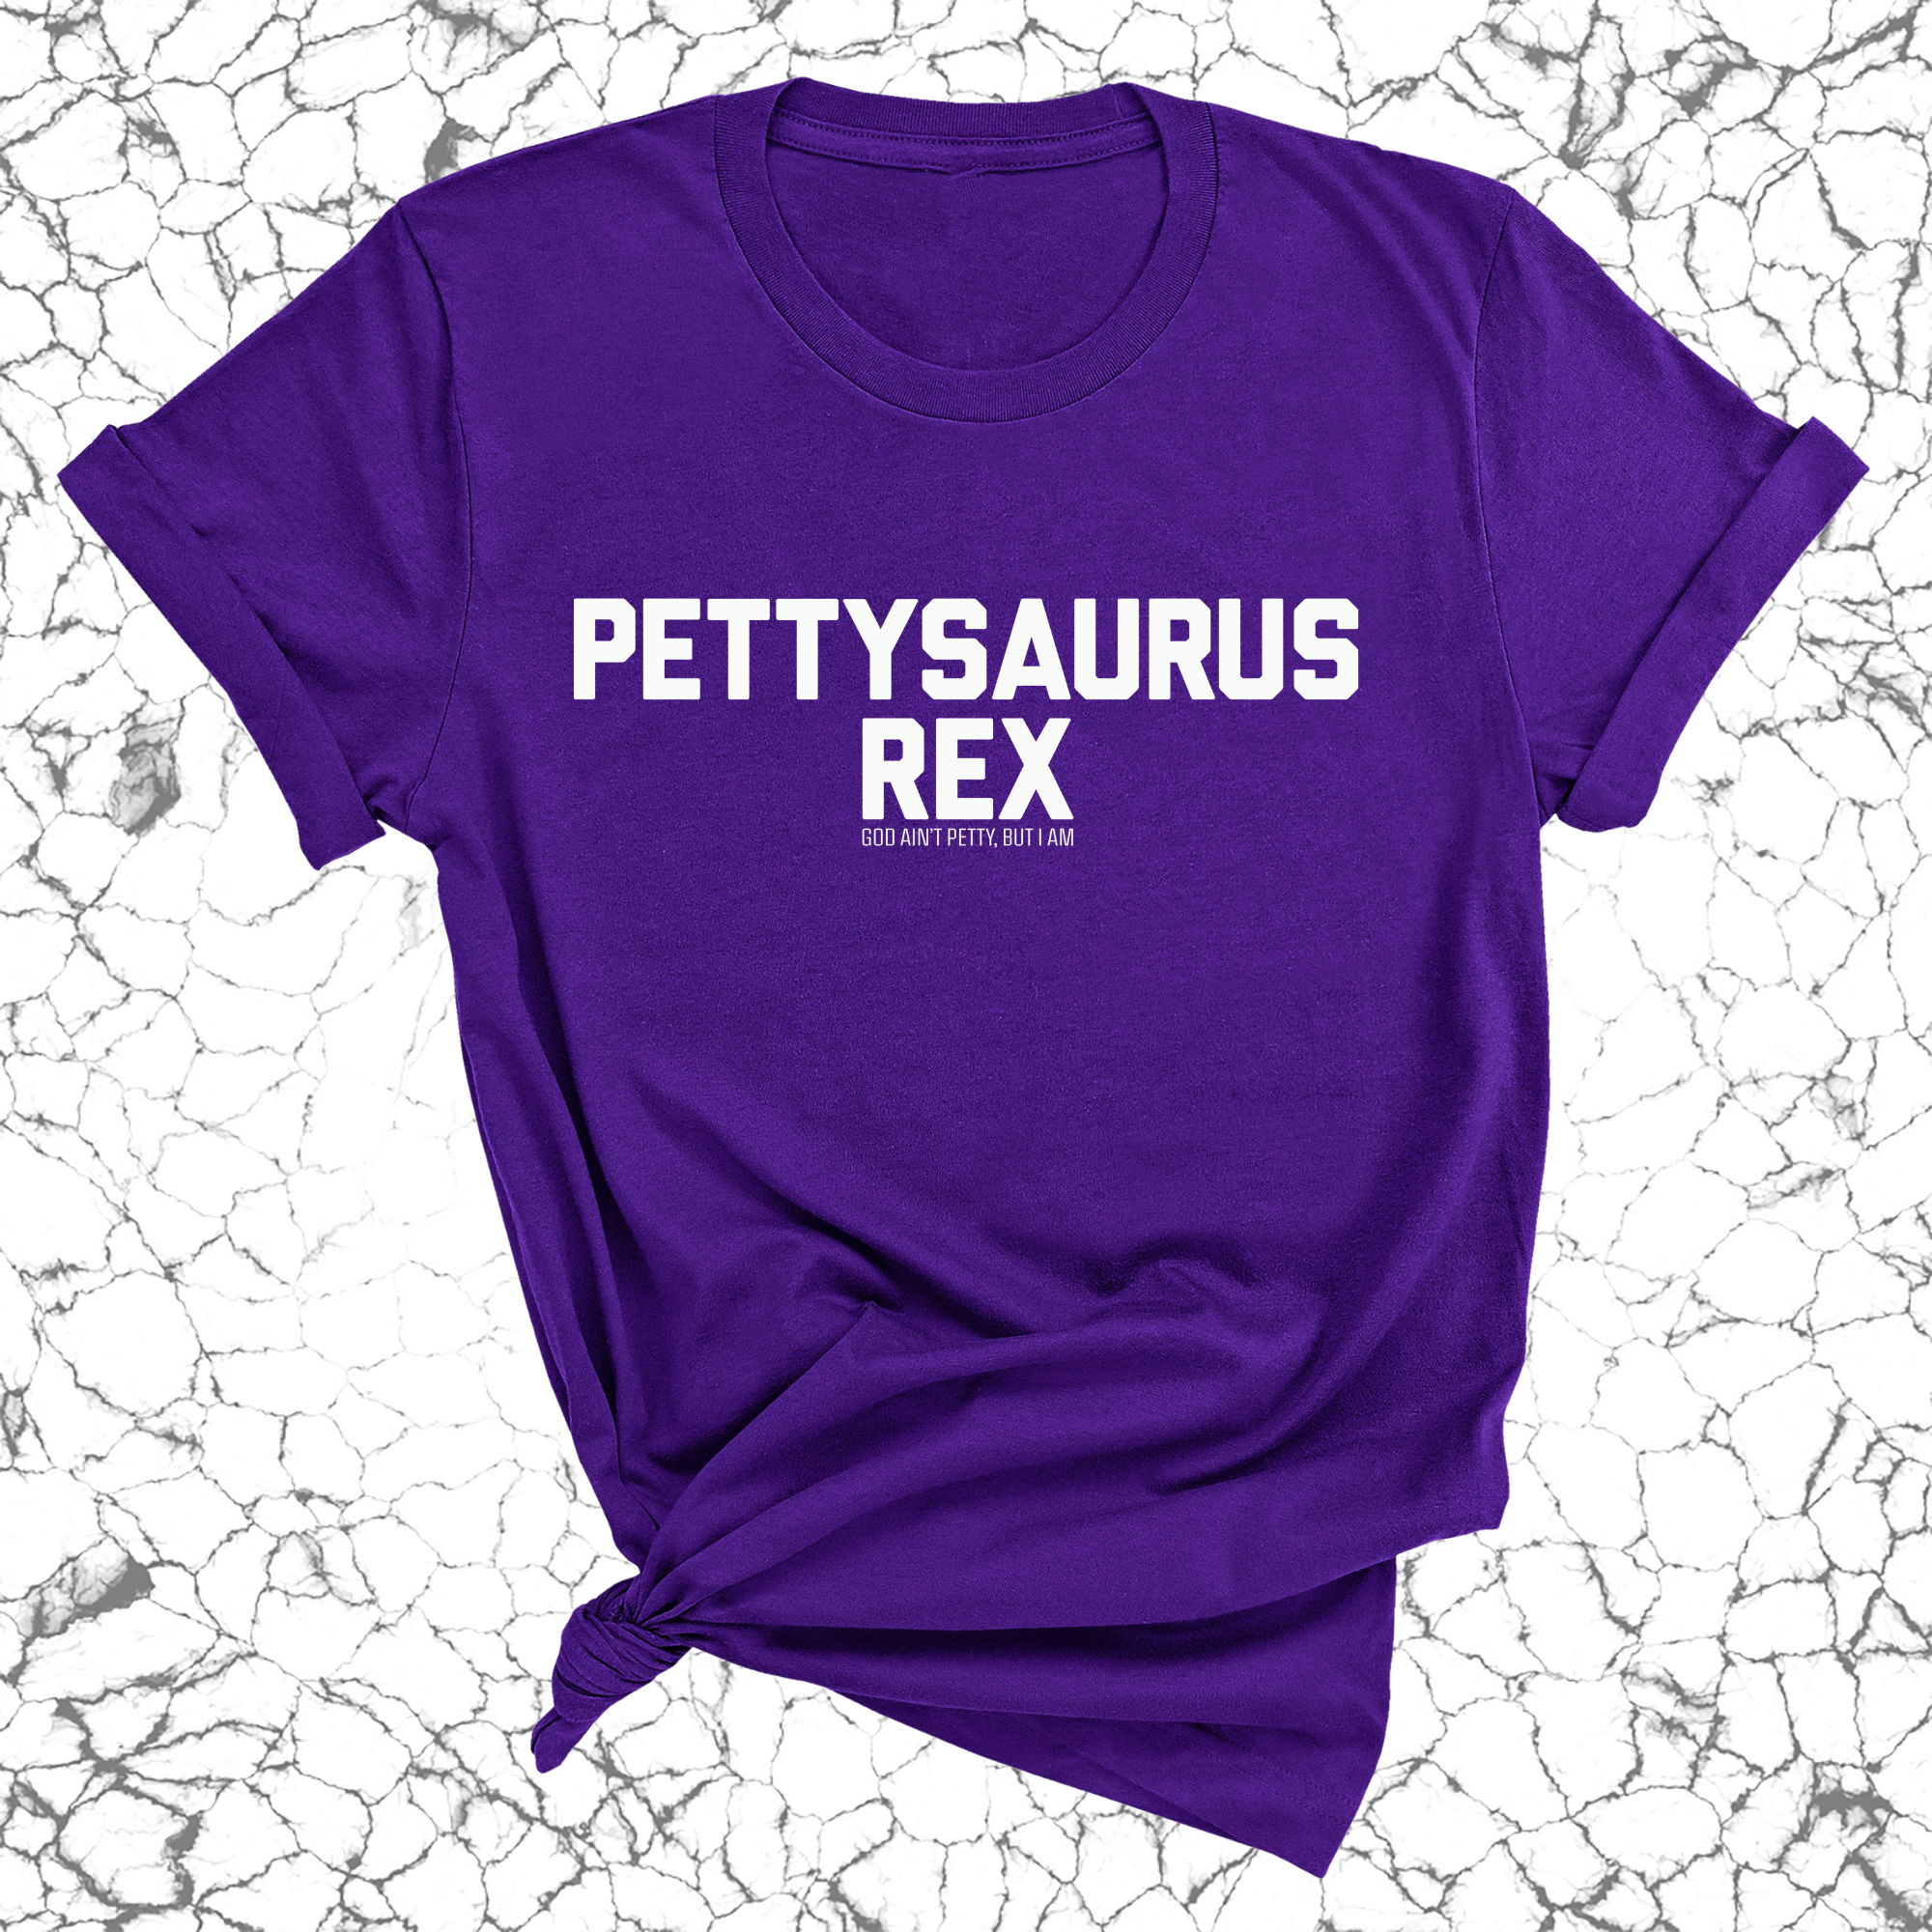 Pettysaurus Rex Unisex Tee-T-Shirt-The Original God Ain't Petty But I Am